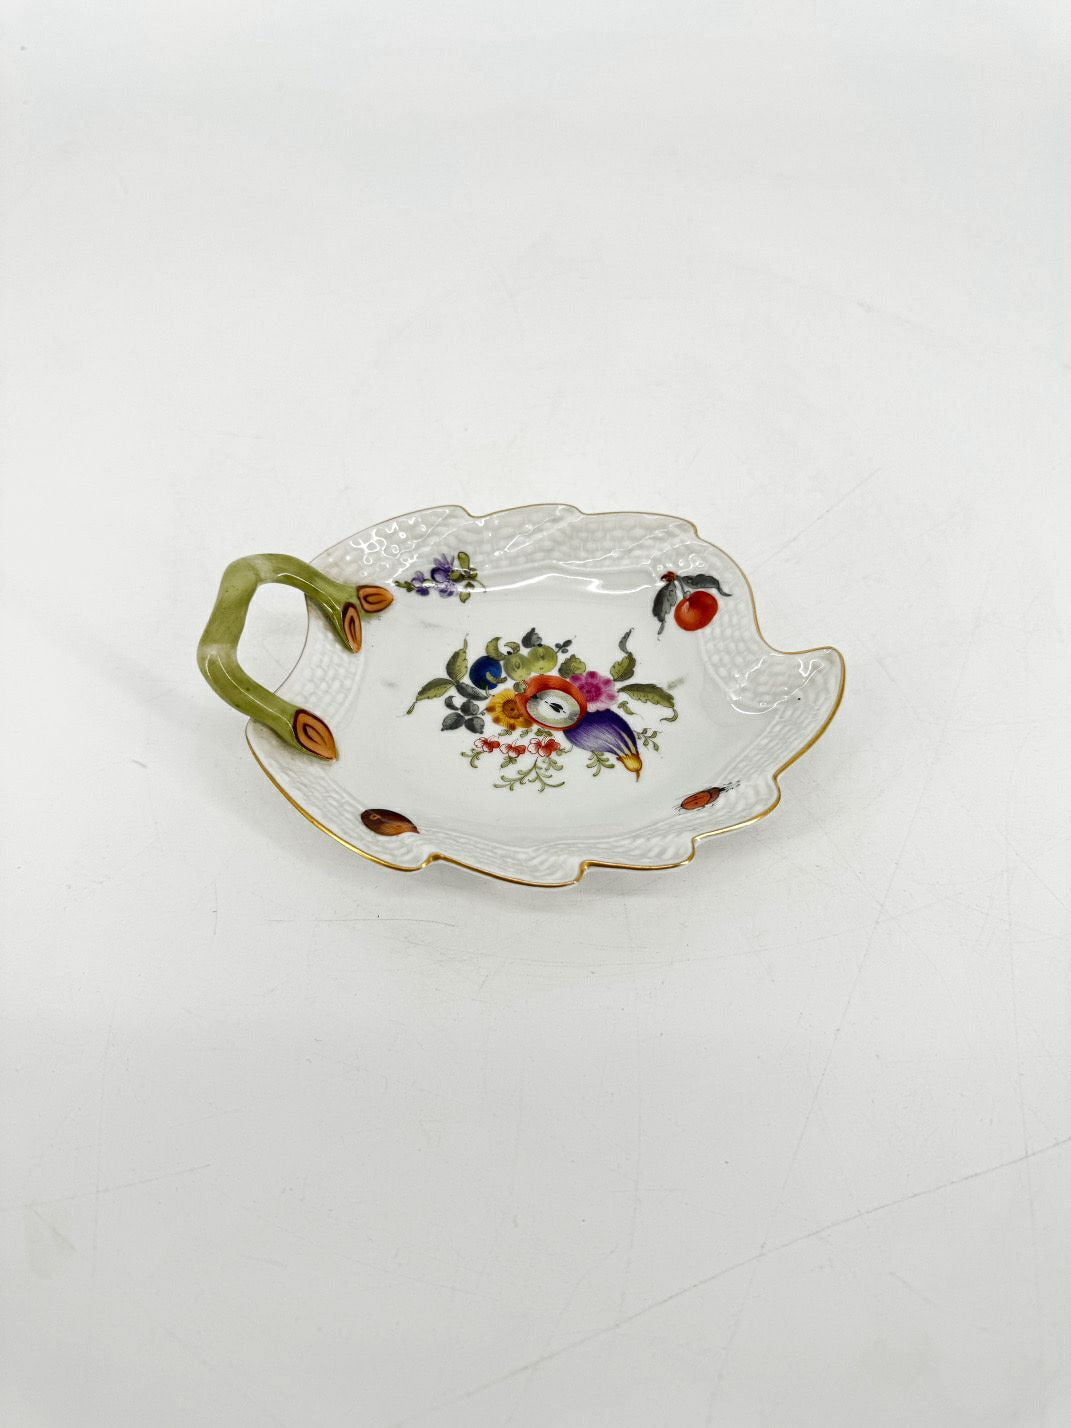 HEREND White Ceramic Fig Decorative Plate